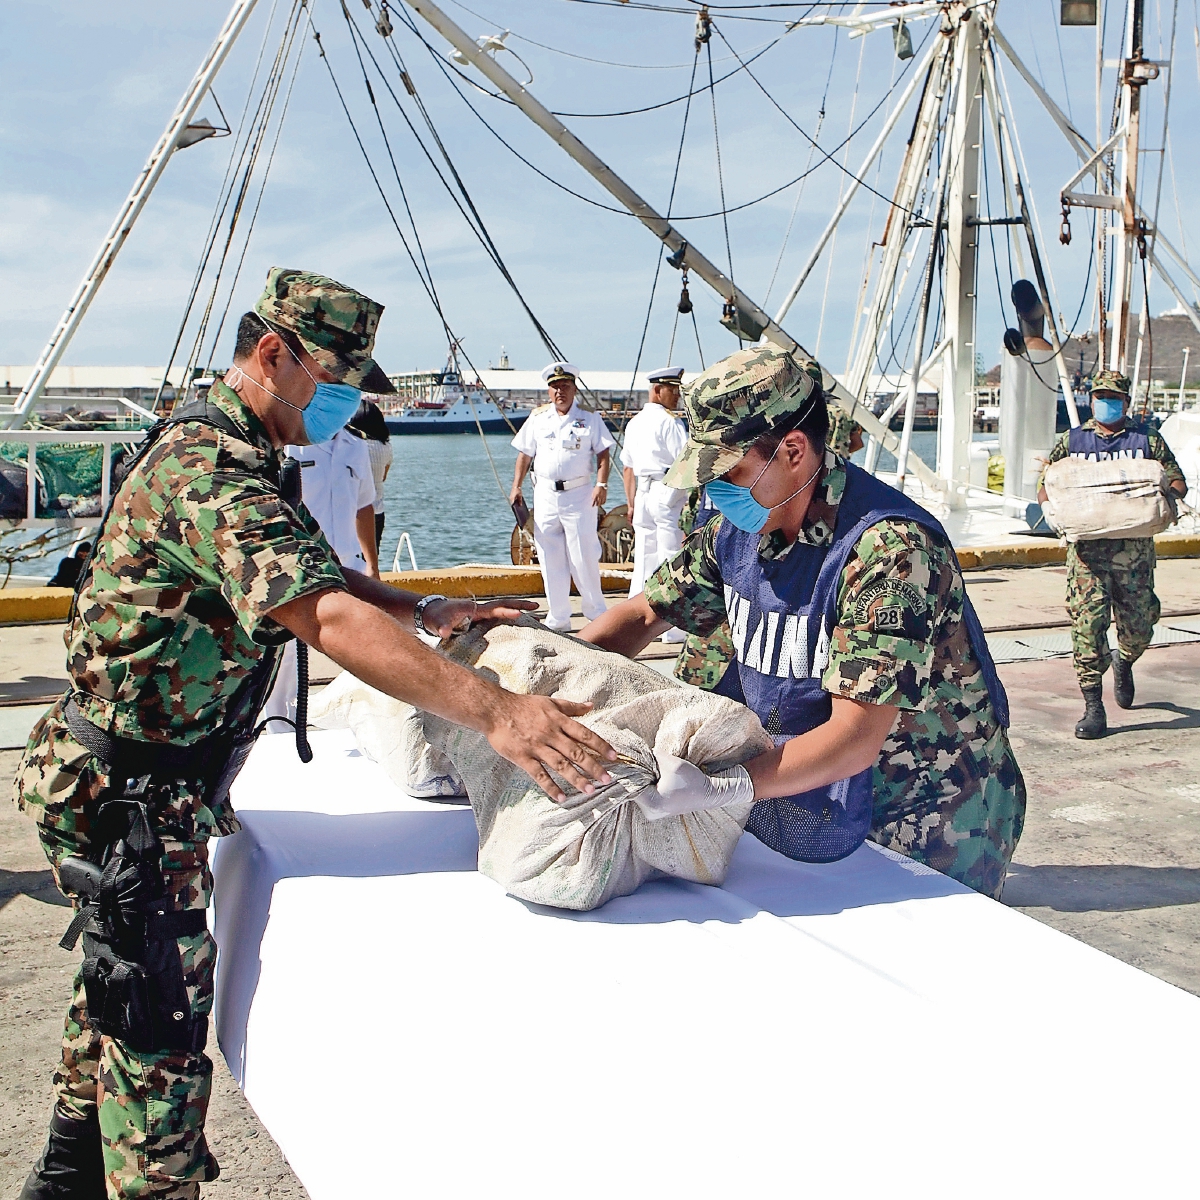 Asegura la Marina cocaína en Acapulco